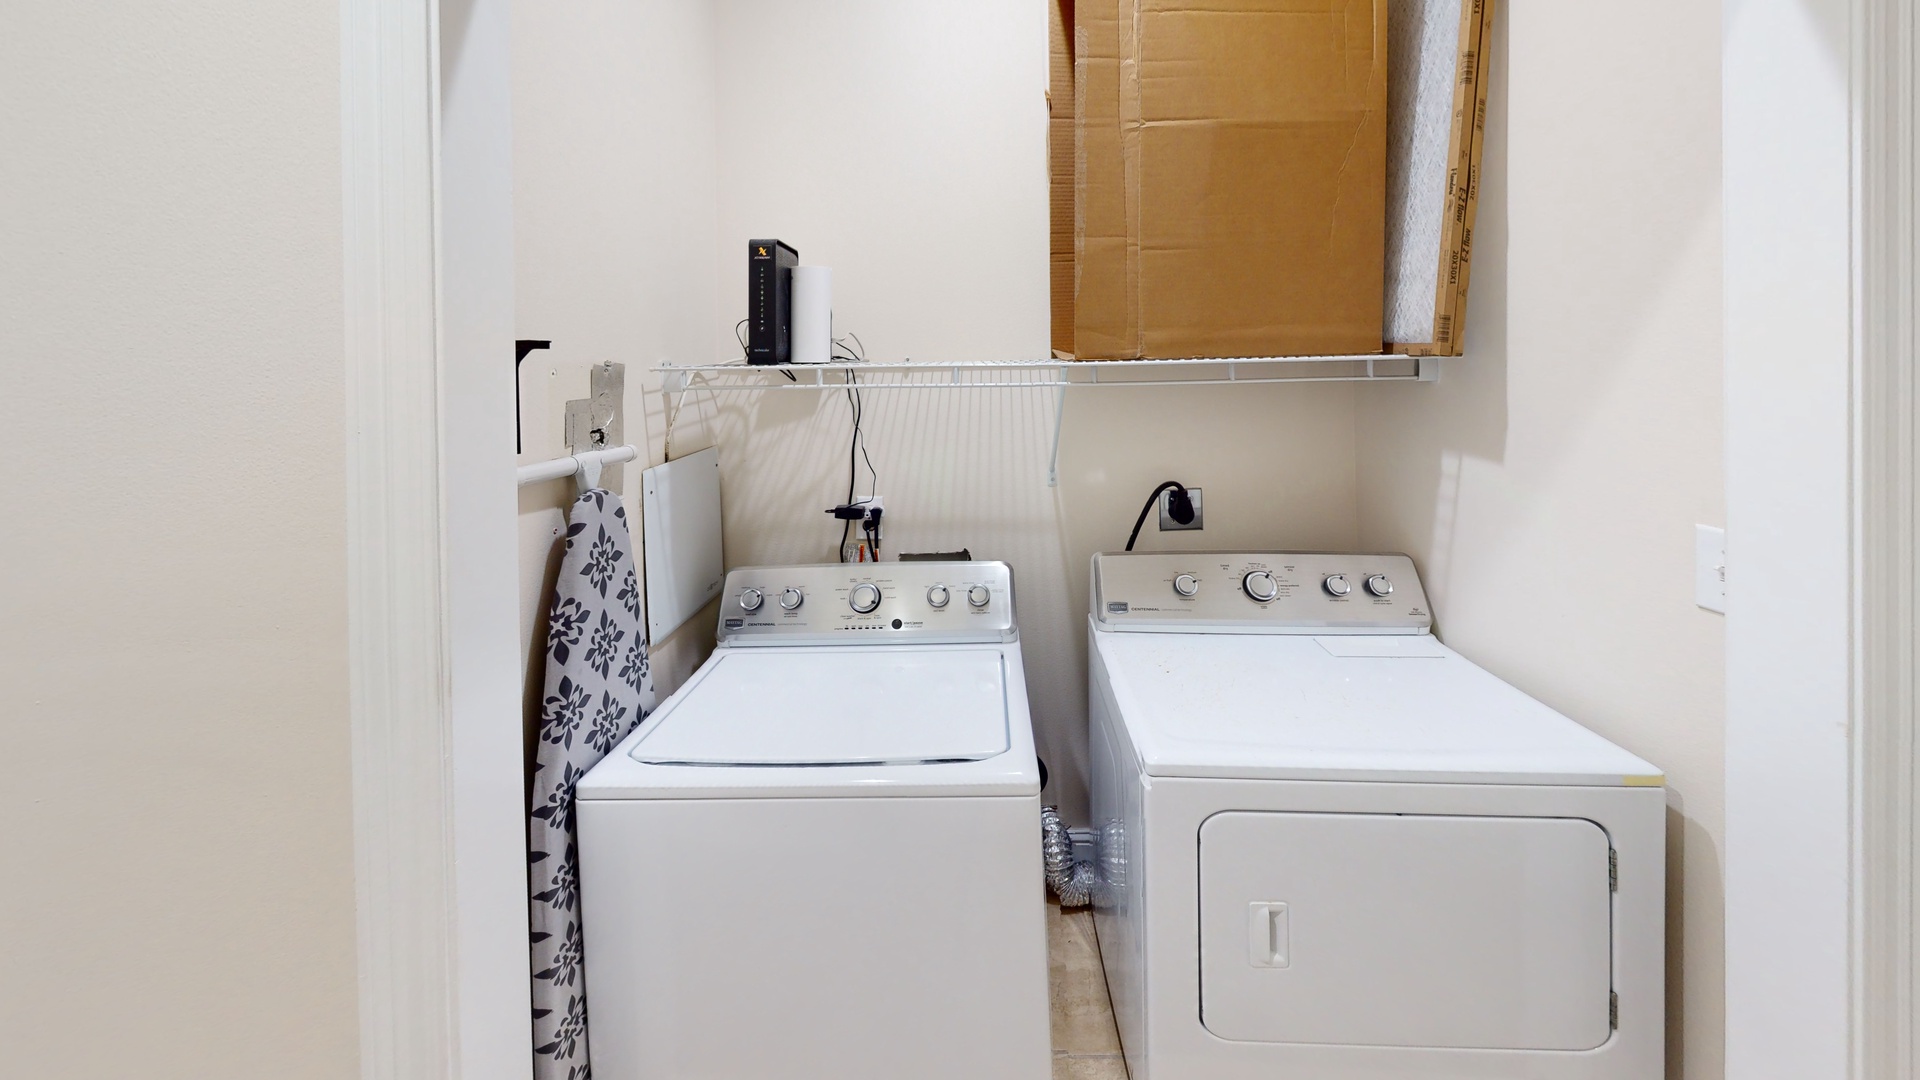 Kiran-A101- Second floor laundry